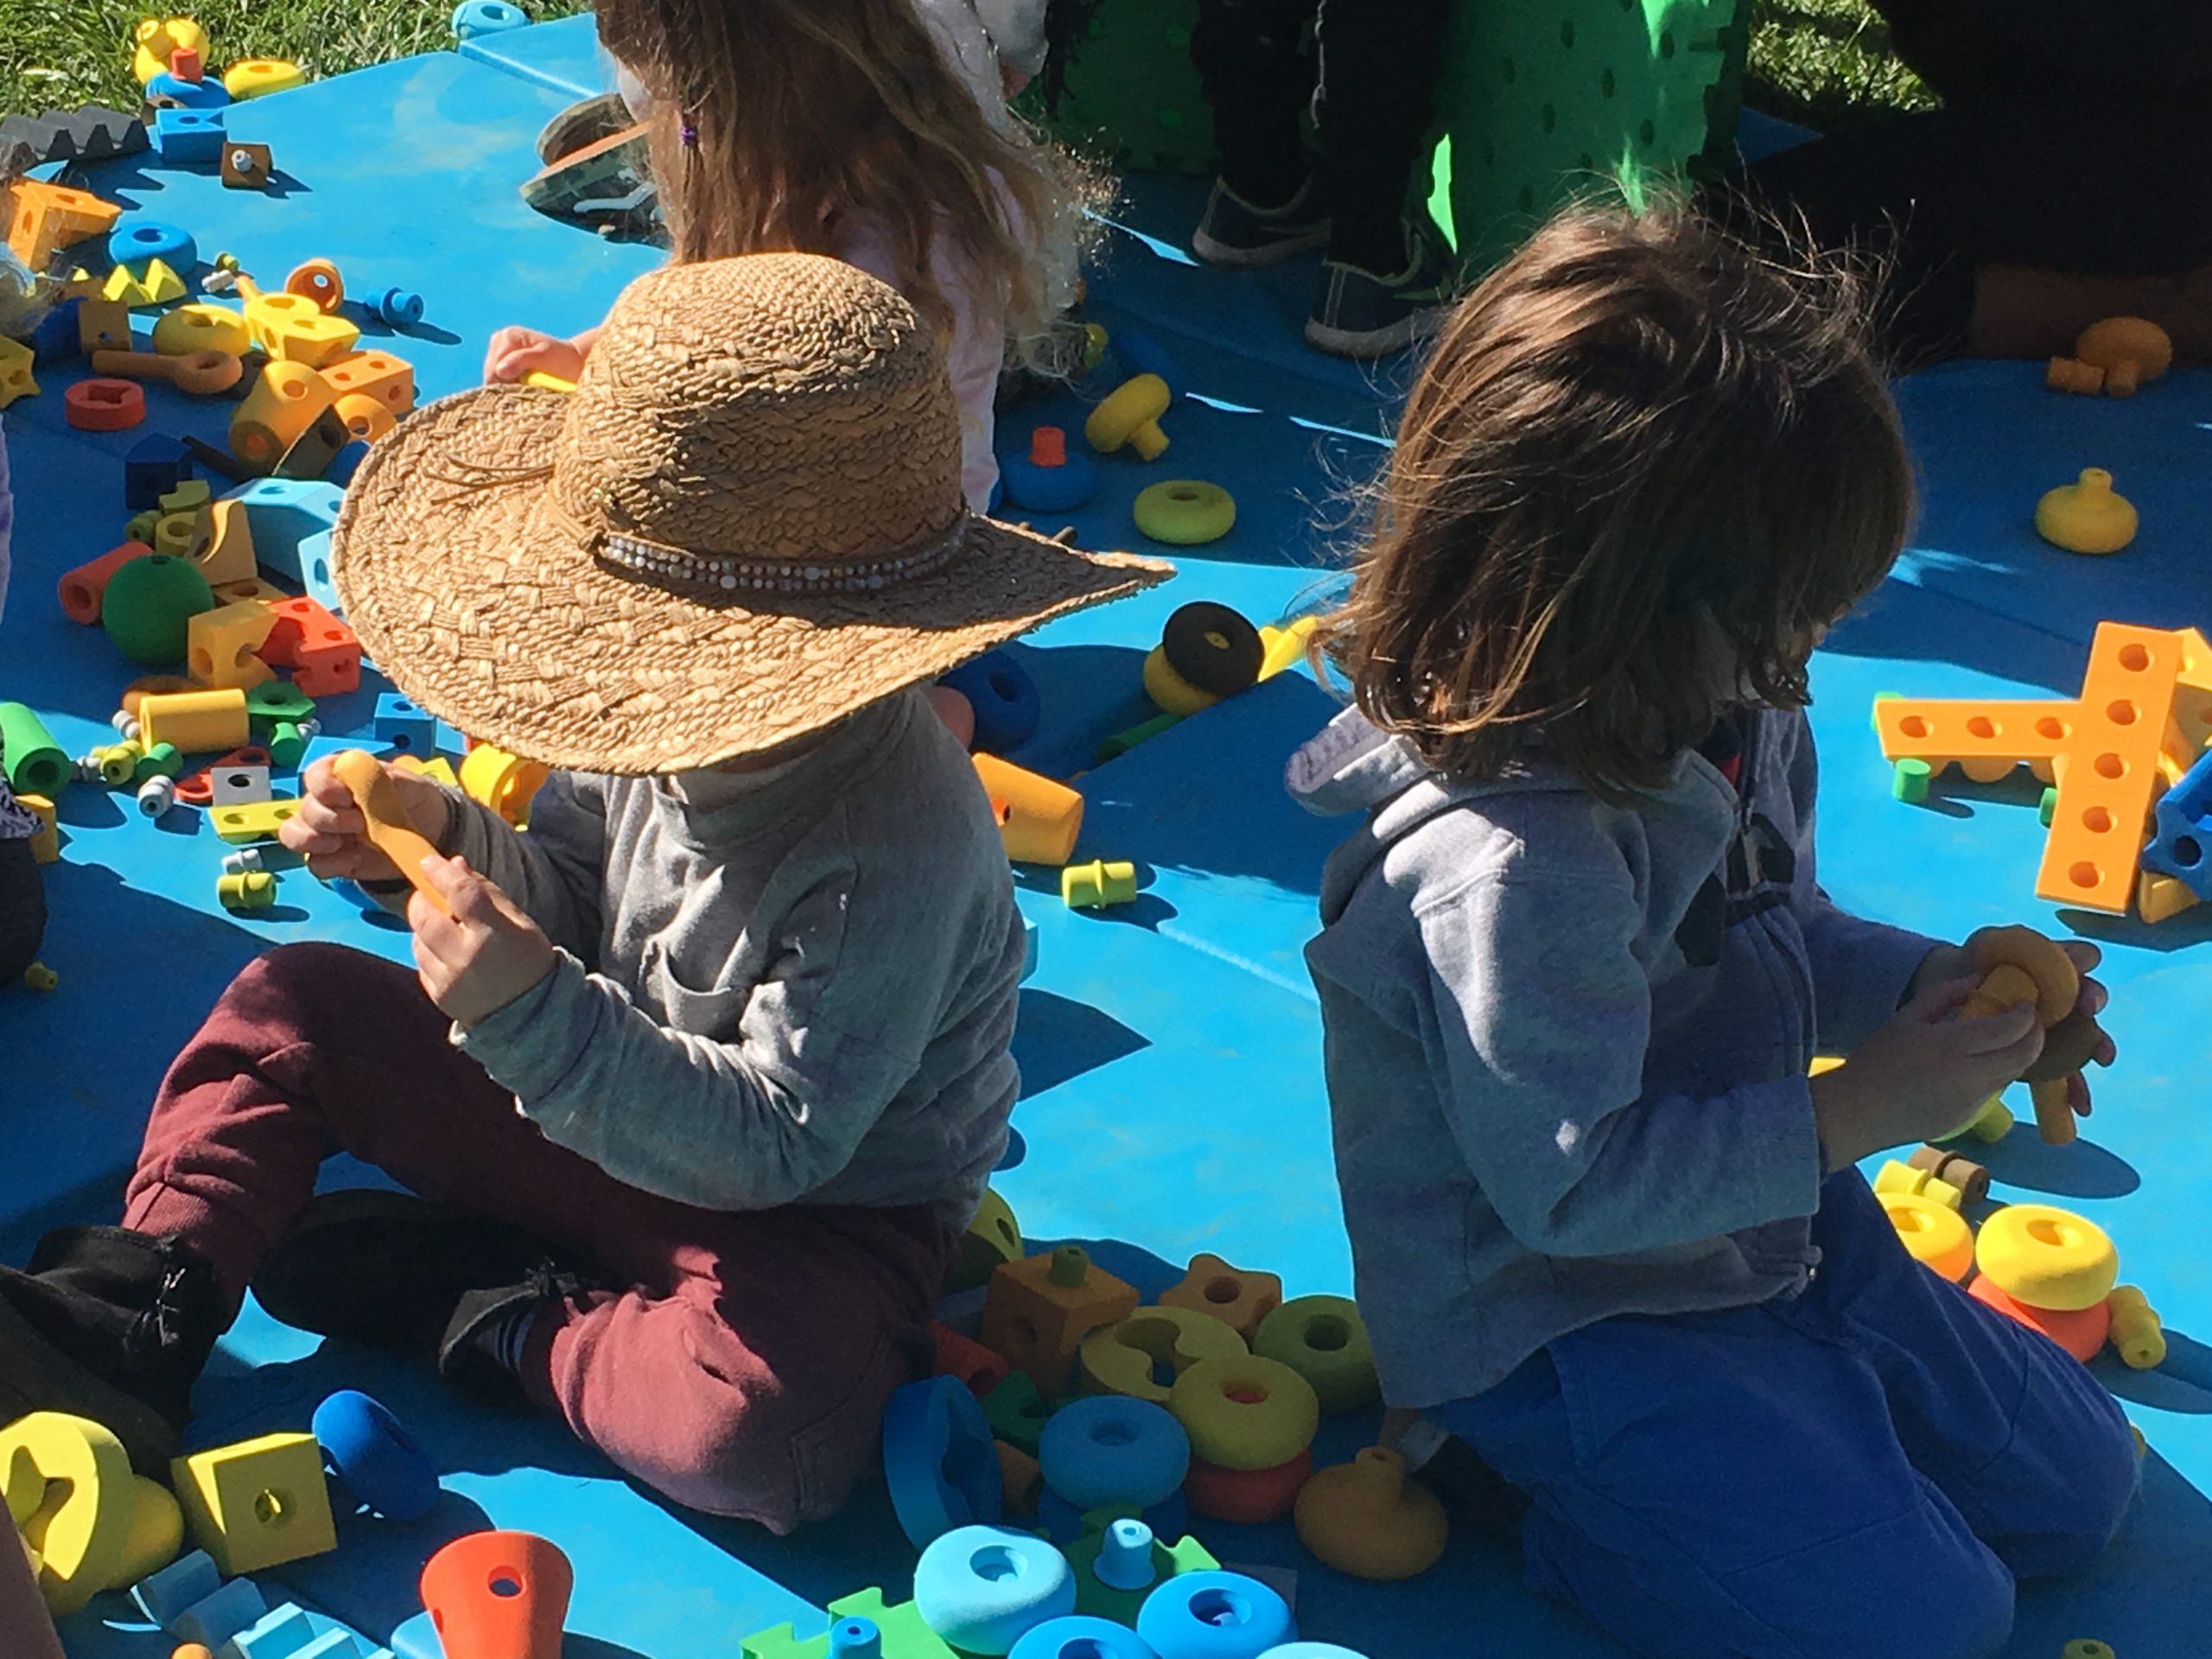 Children playing with Bright Day Big Blocks